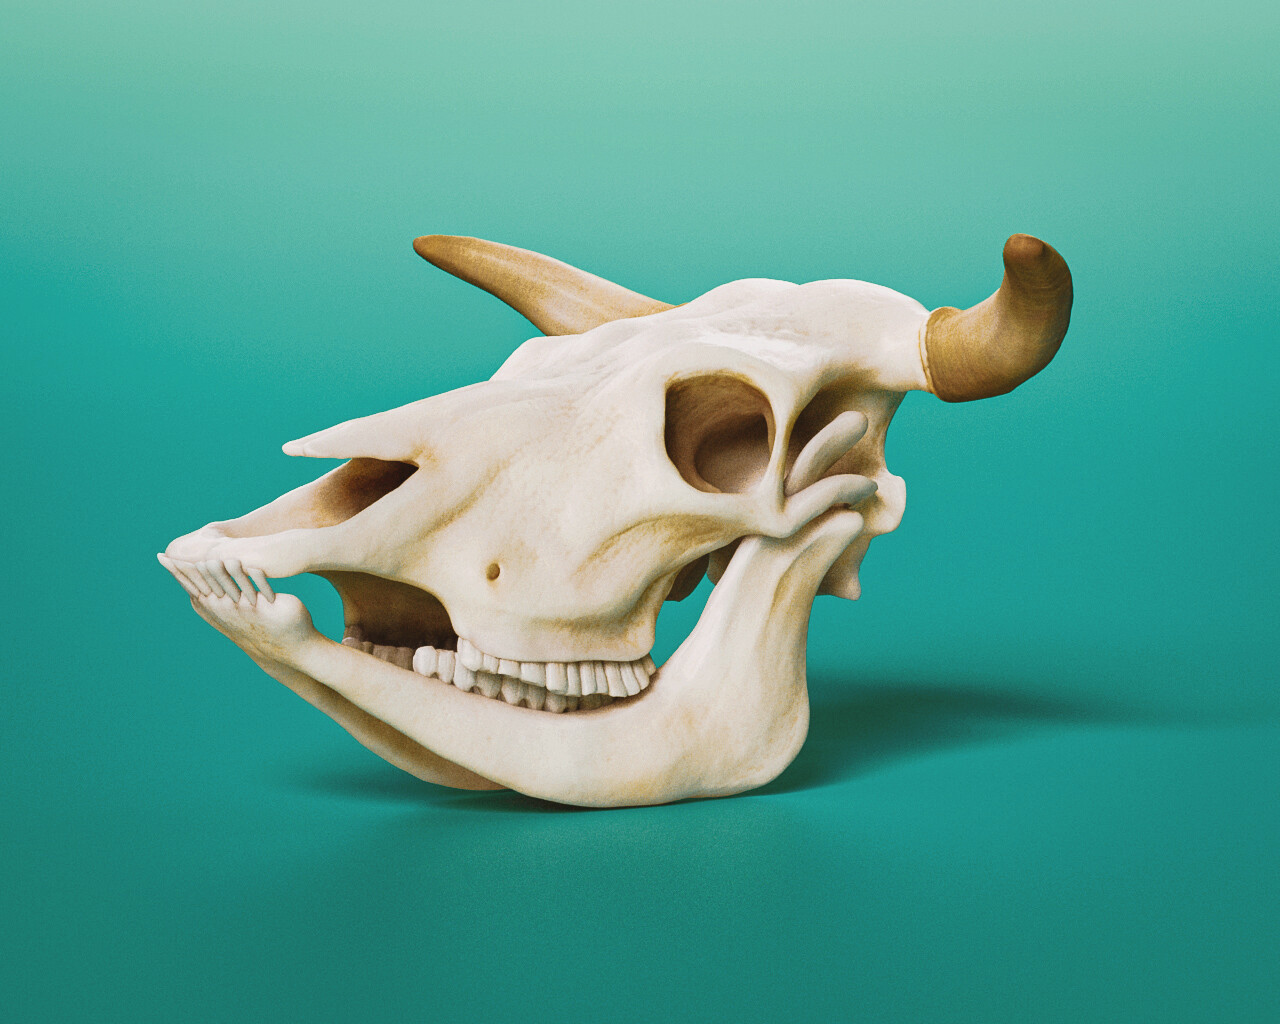 Cow Skull | Digital study